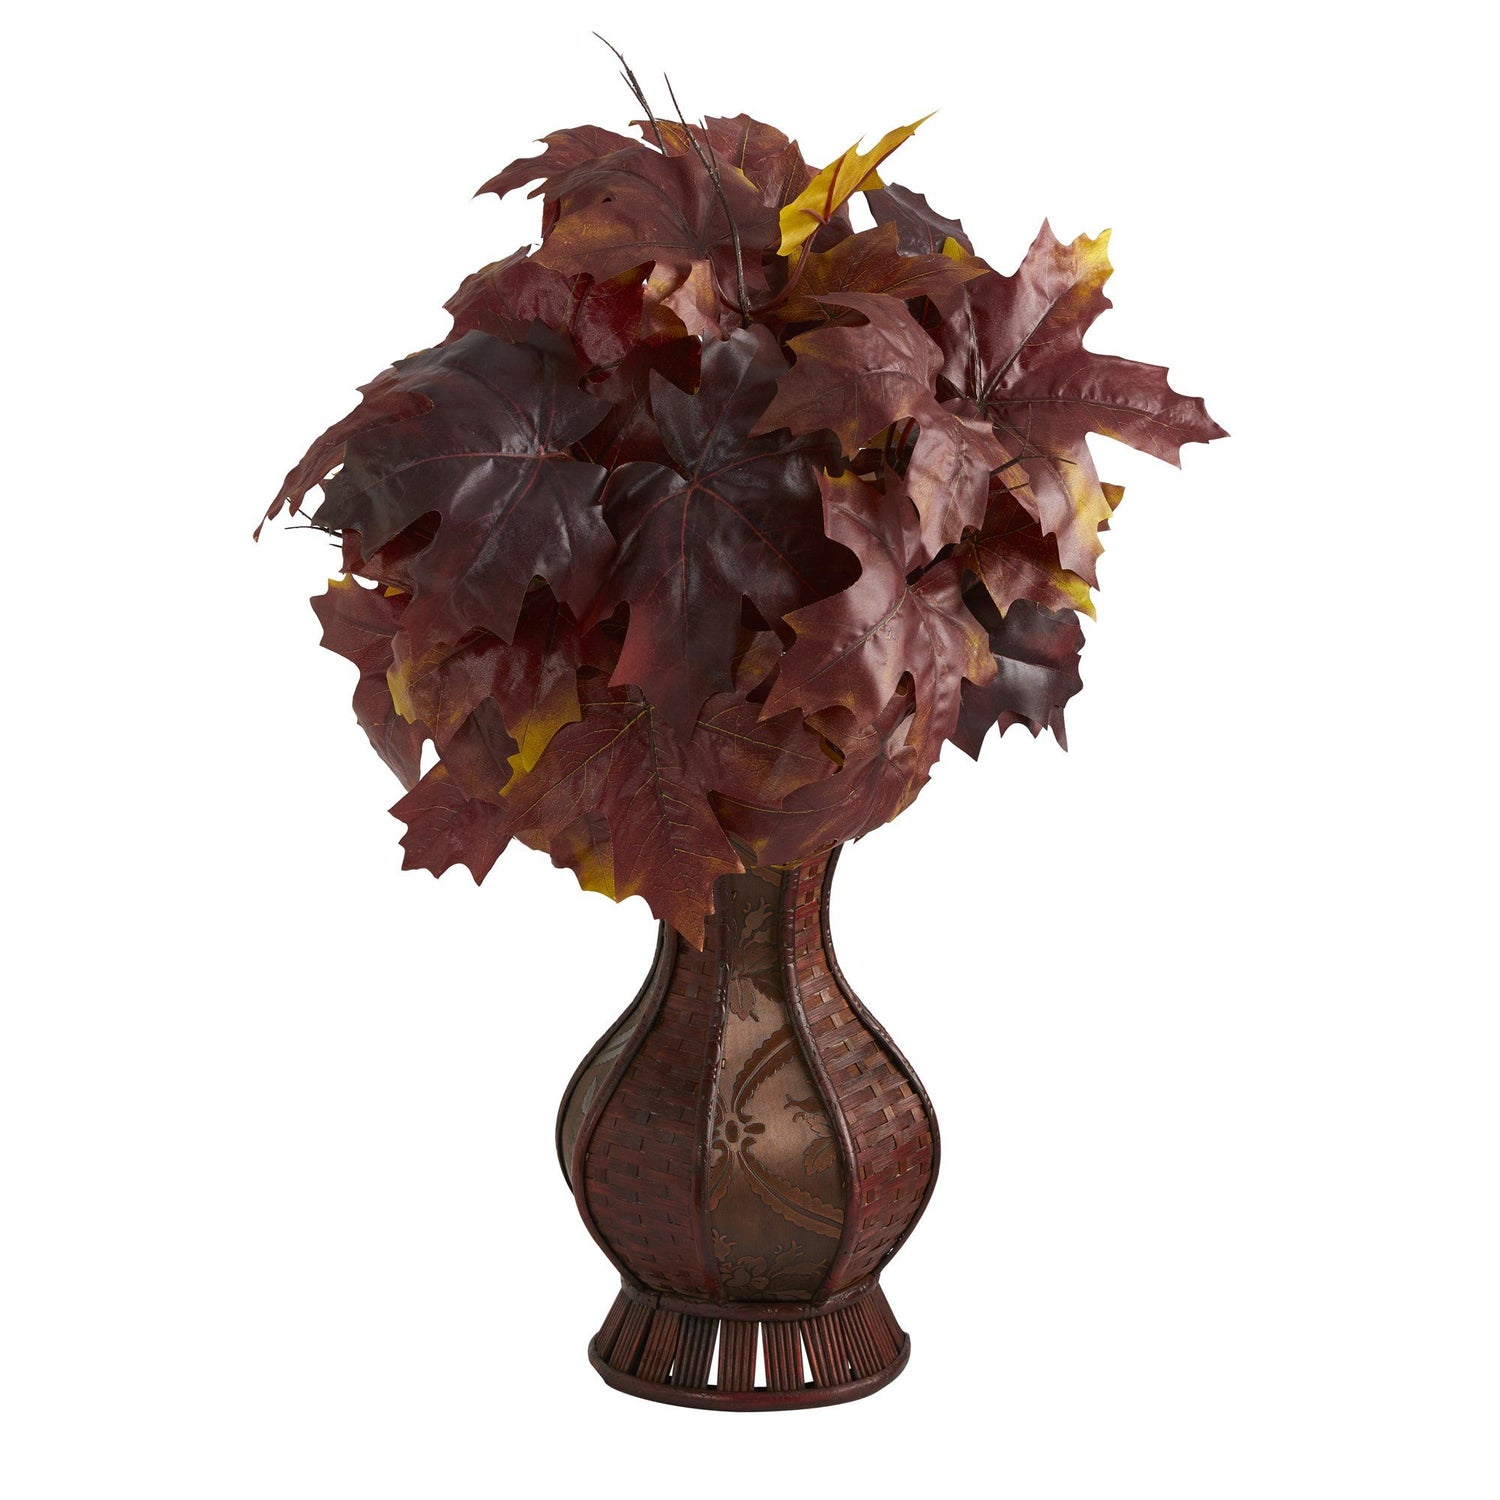 24” Autumn Maple Leaf Artificial Plant in Decorative Planter